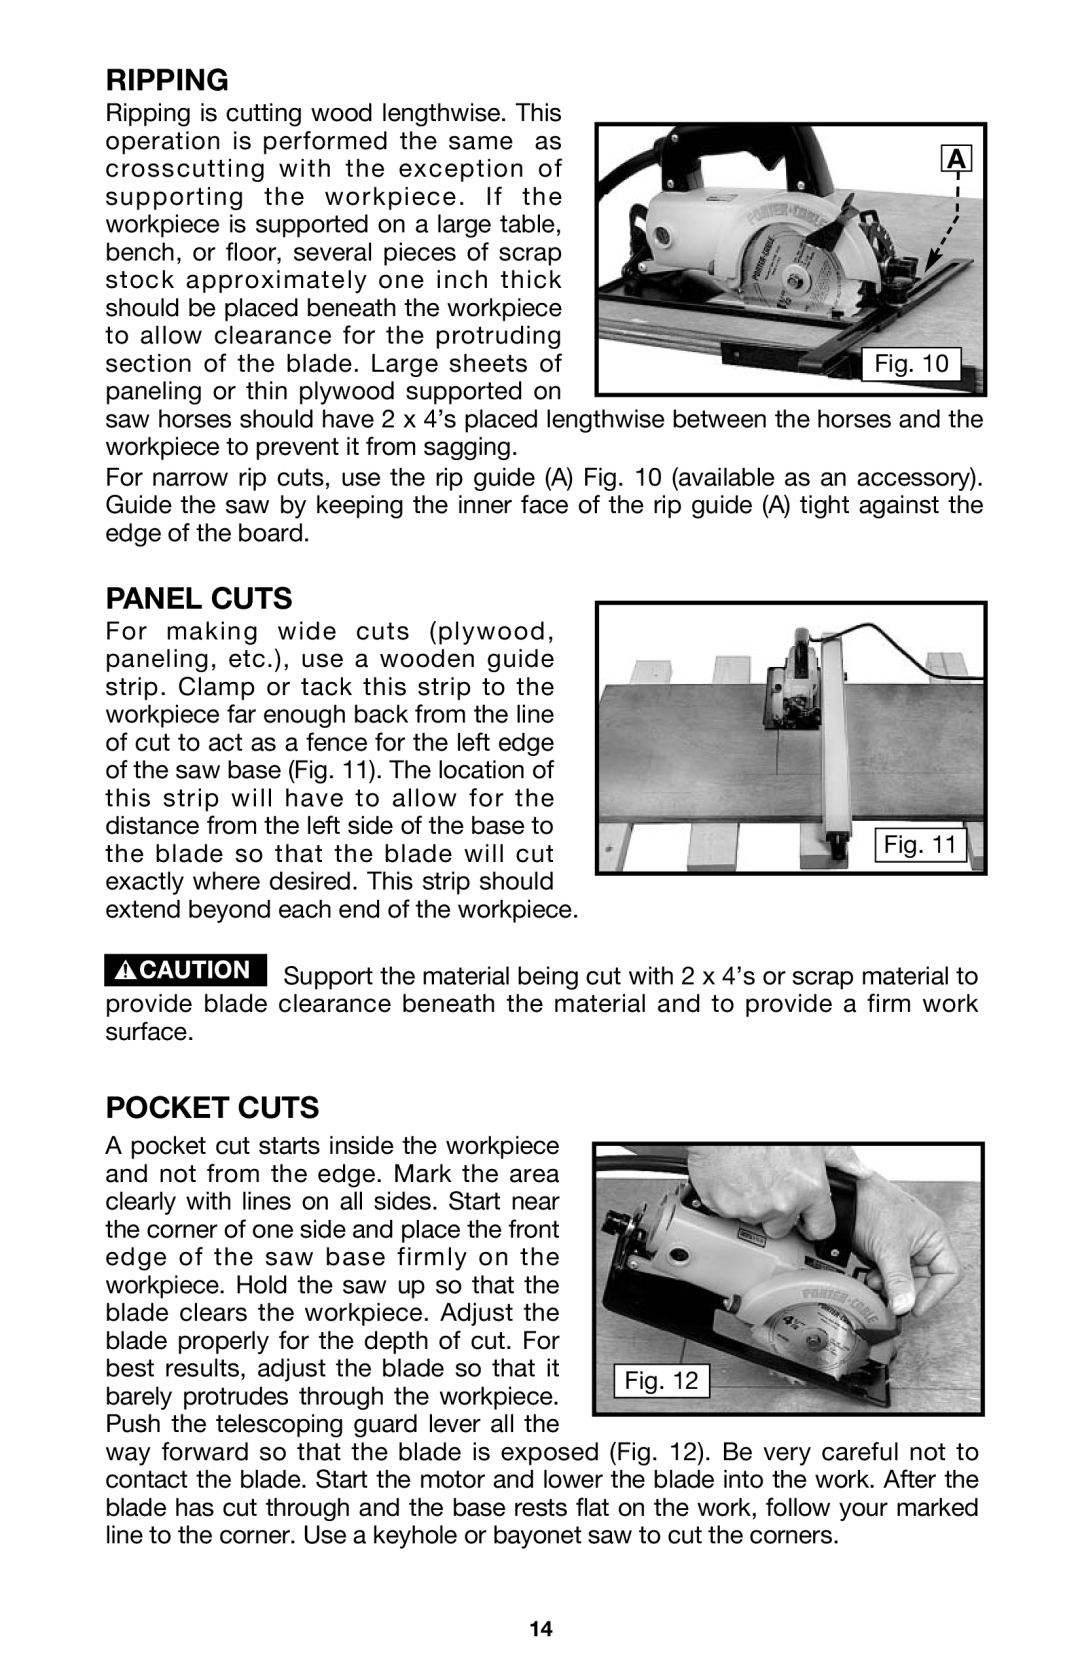 PYLE Audio 314 instruction manual Ripping, Panel Cuts, Pocket Cuts 